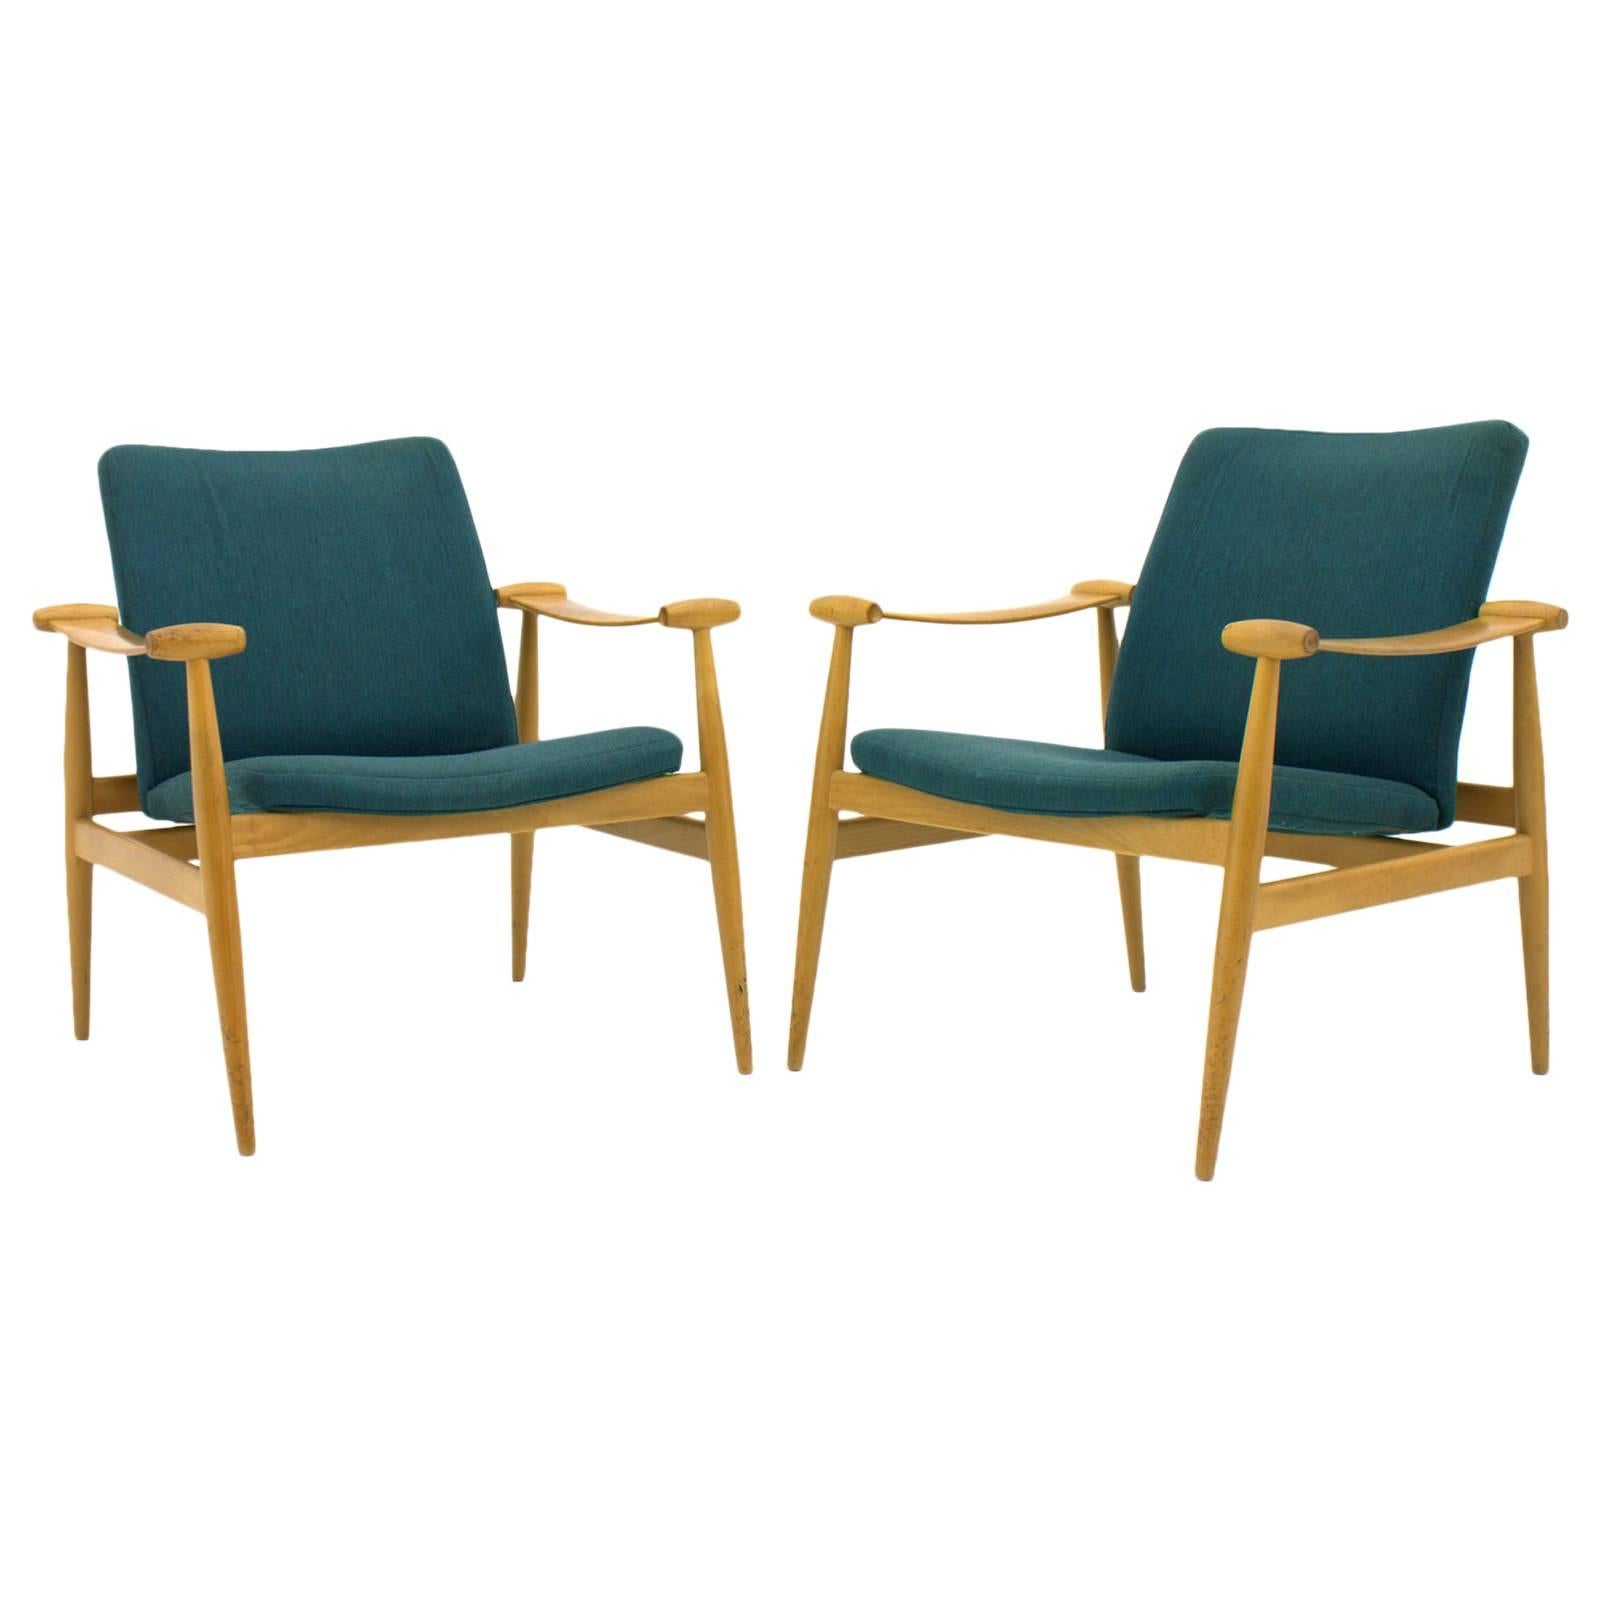 Pair of Finn Juhl Spade Lounge Chairs FD 133, Denmark, 1954, France & Sons